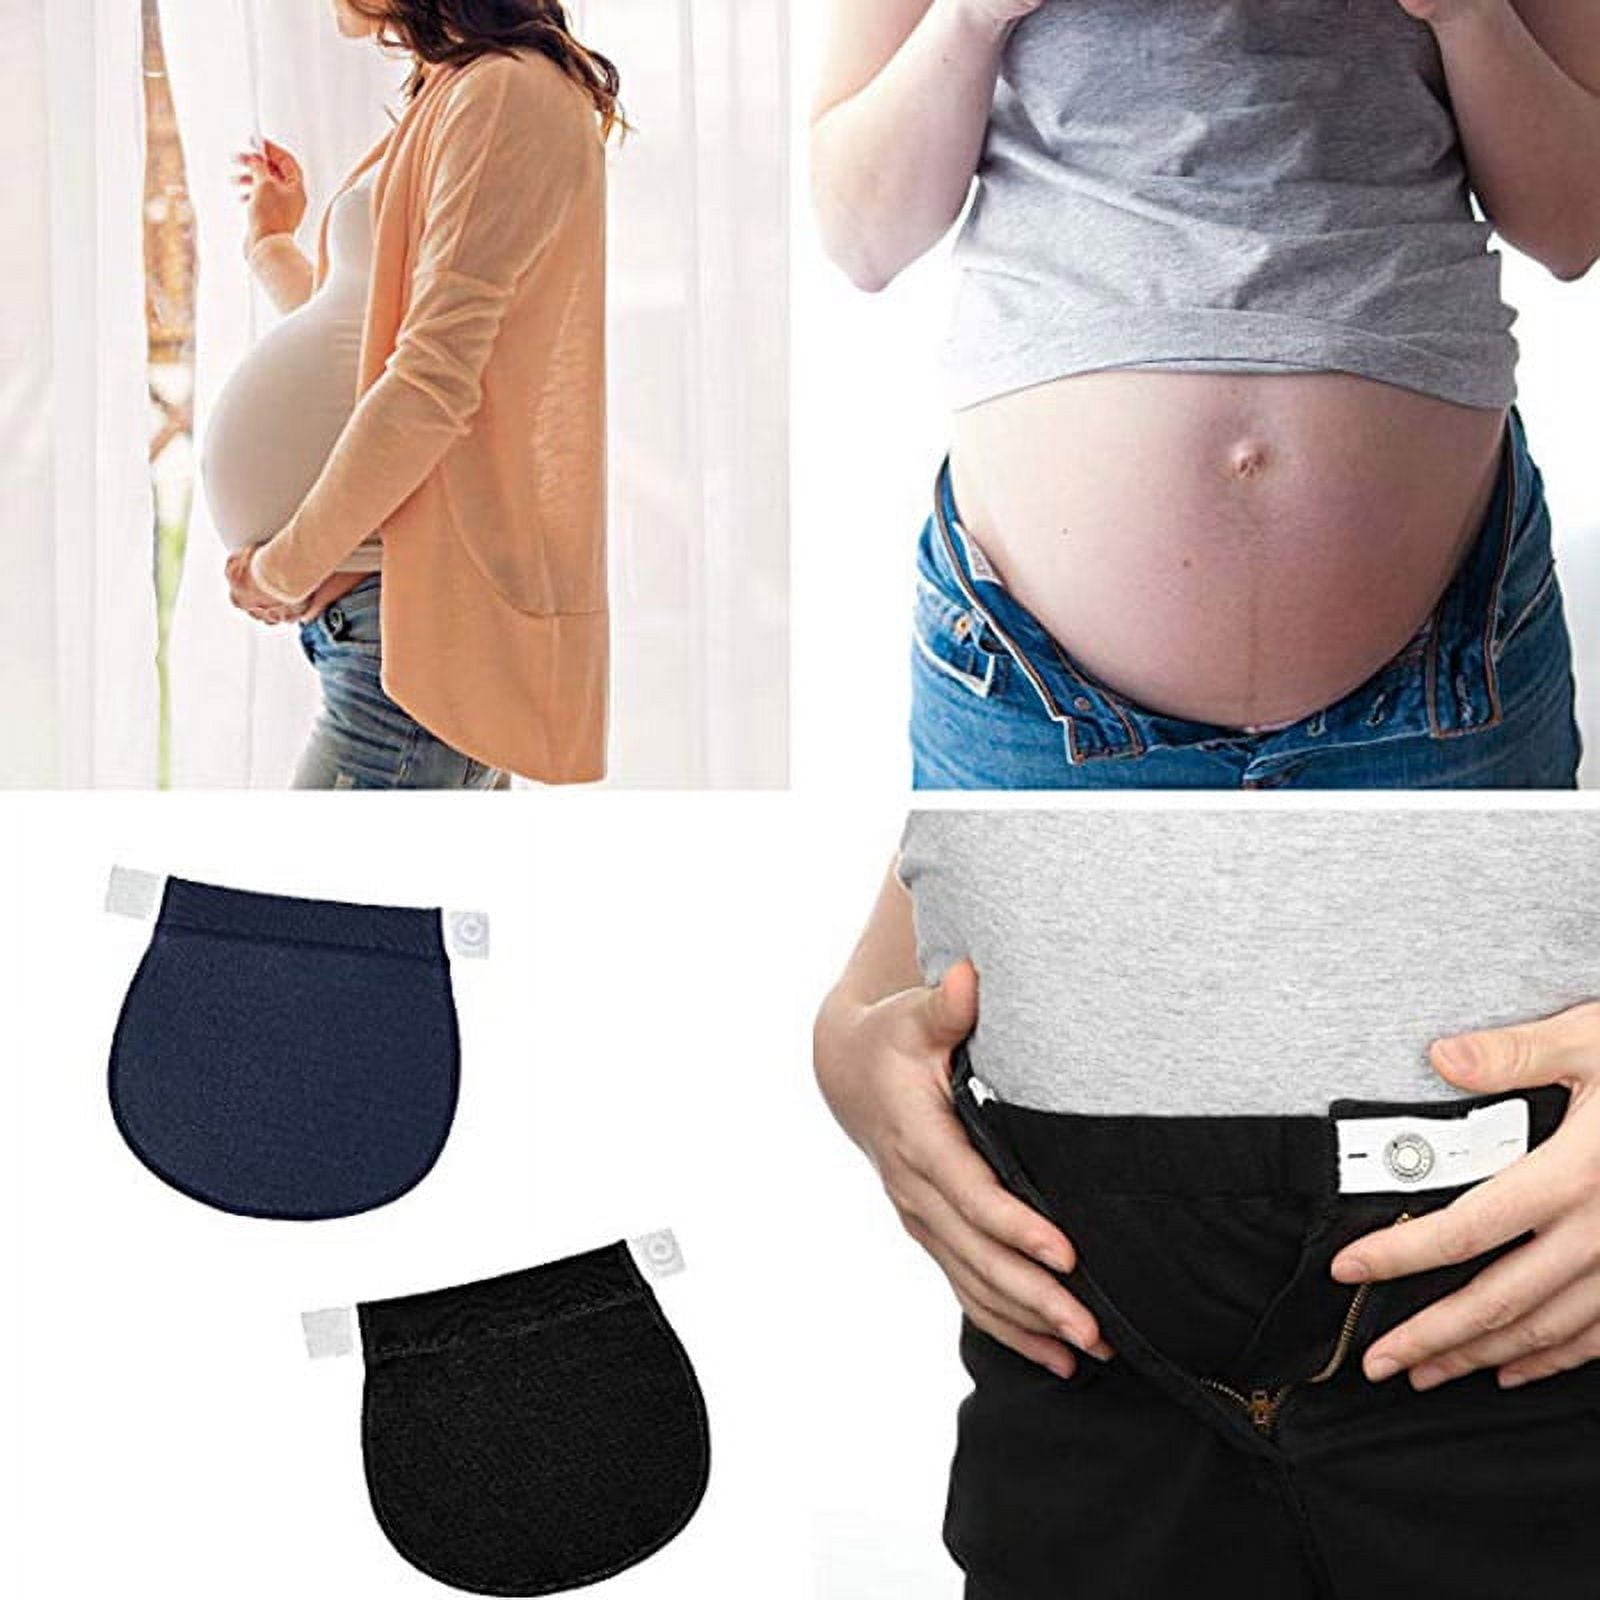 6 Pregnant Trouser Extenders Adjustable Waist Extension Pregnancy Waistband  Extender Maternity Pants Extender Elastic Pregnancy Pants Extender 6